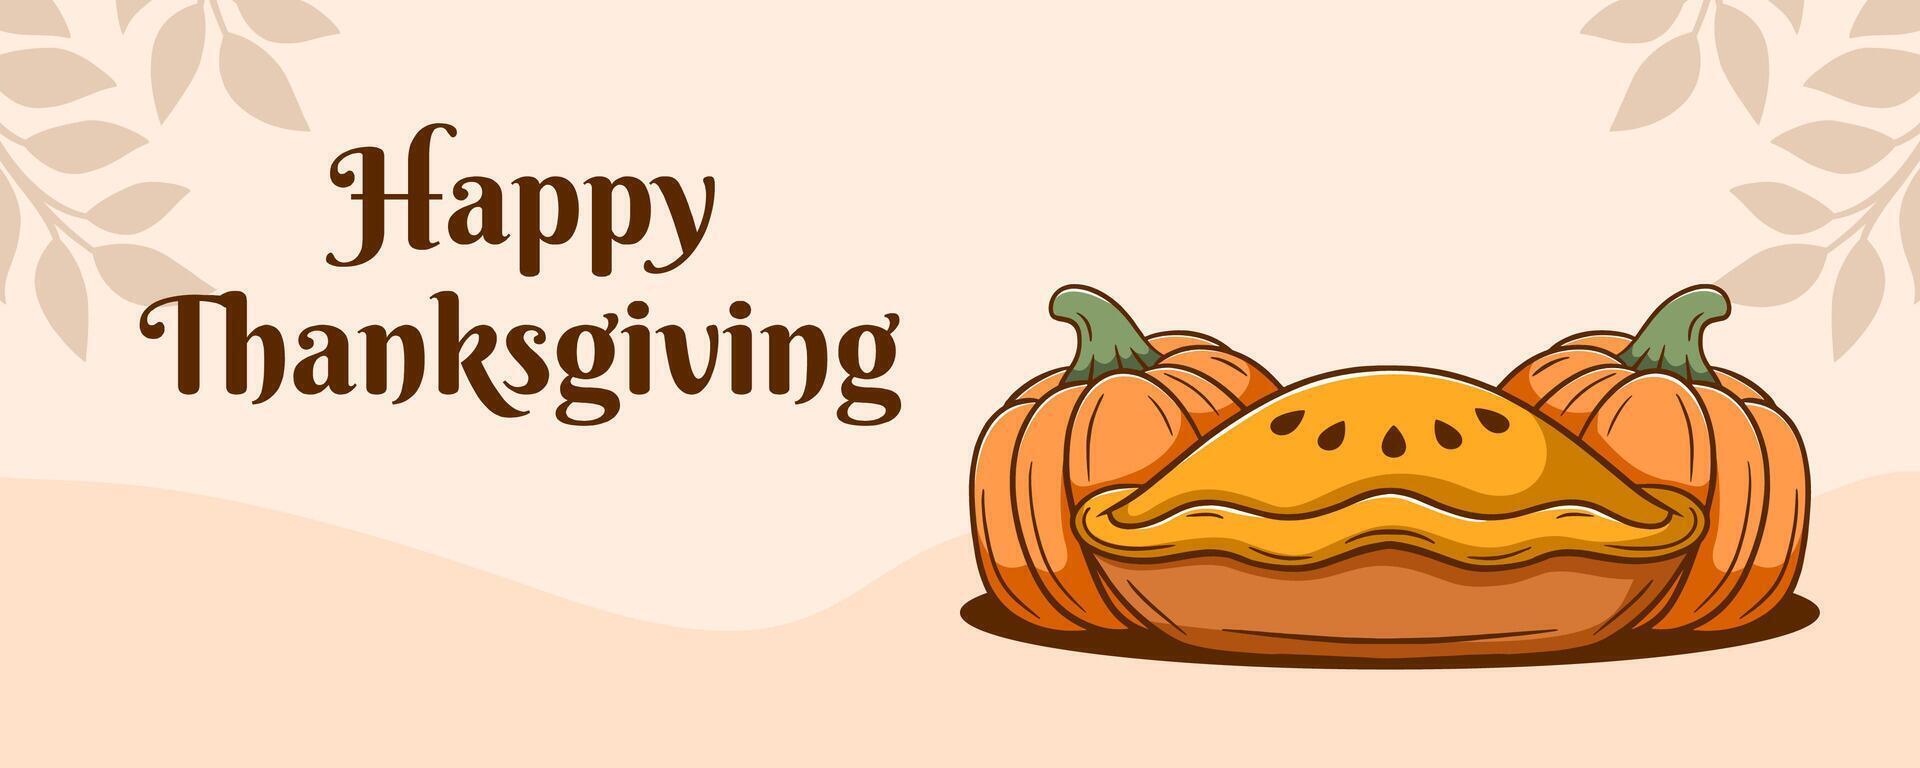 Happy thanksgiving banner with cartoon pie, pumpkin. vector illustration